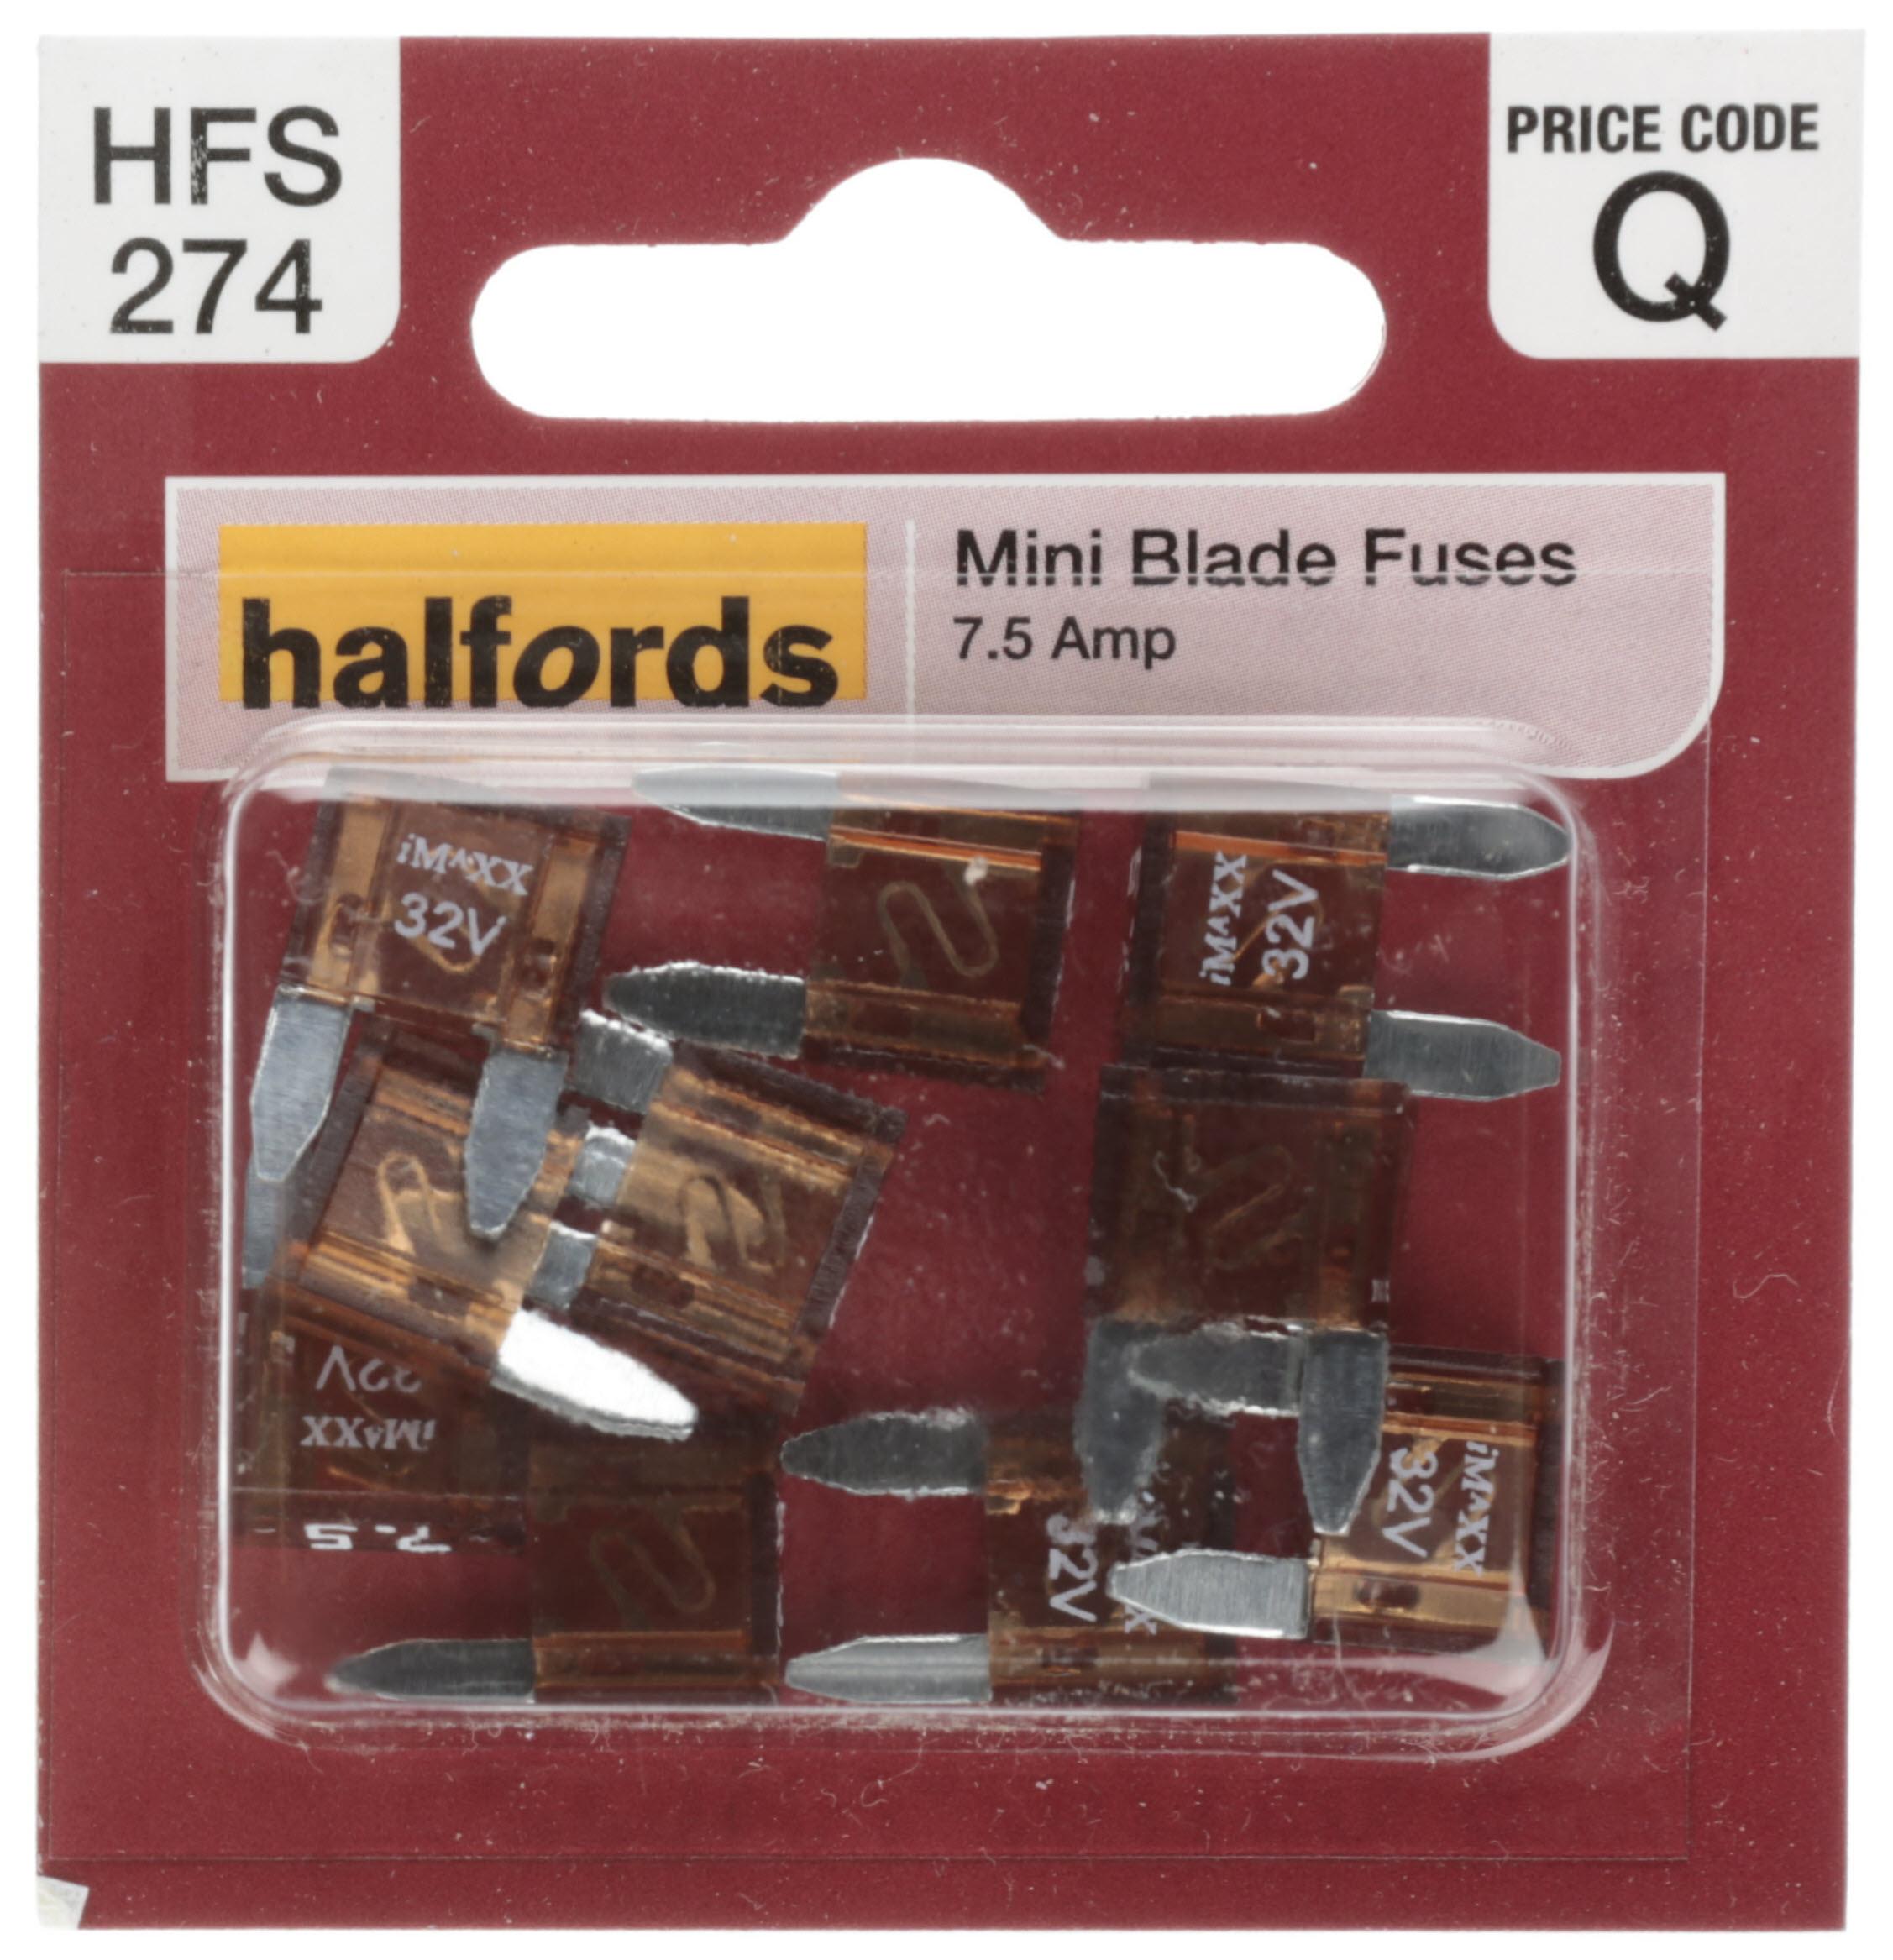 Halfords Mini Blade Fuses 7.5 Amp (Hfs274)